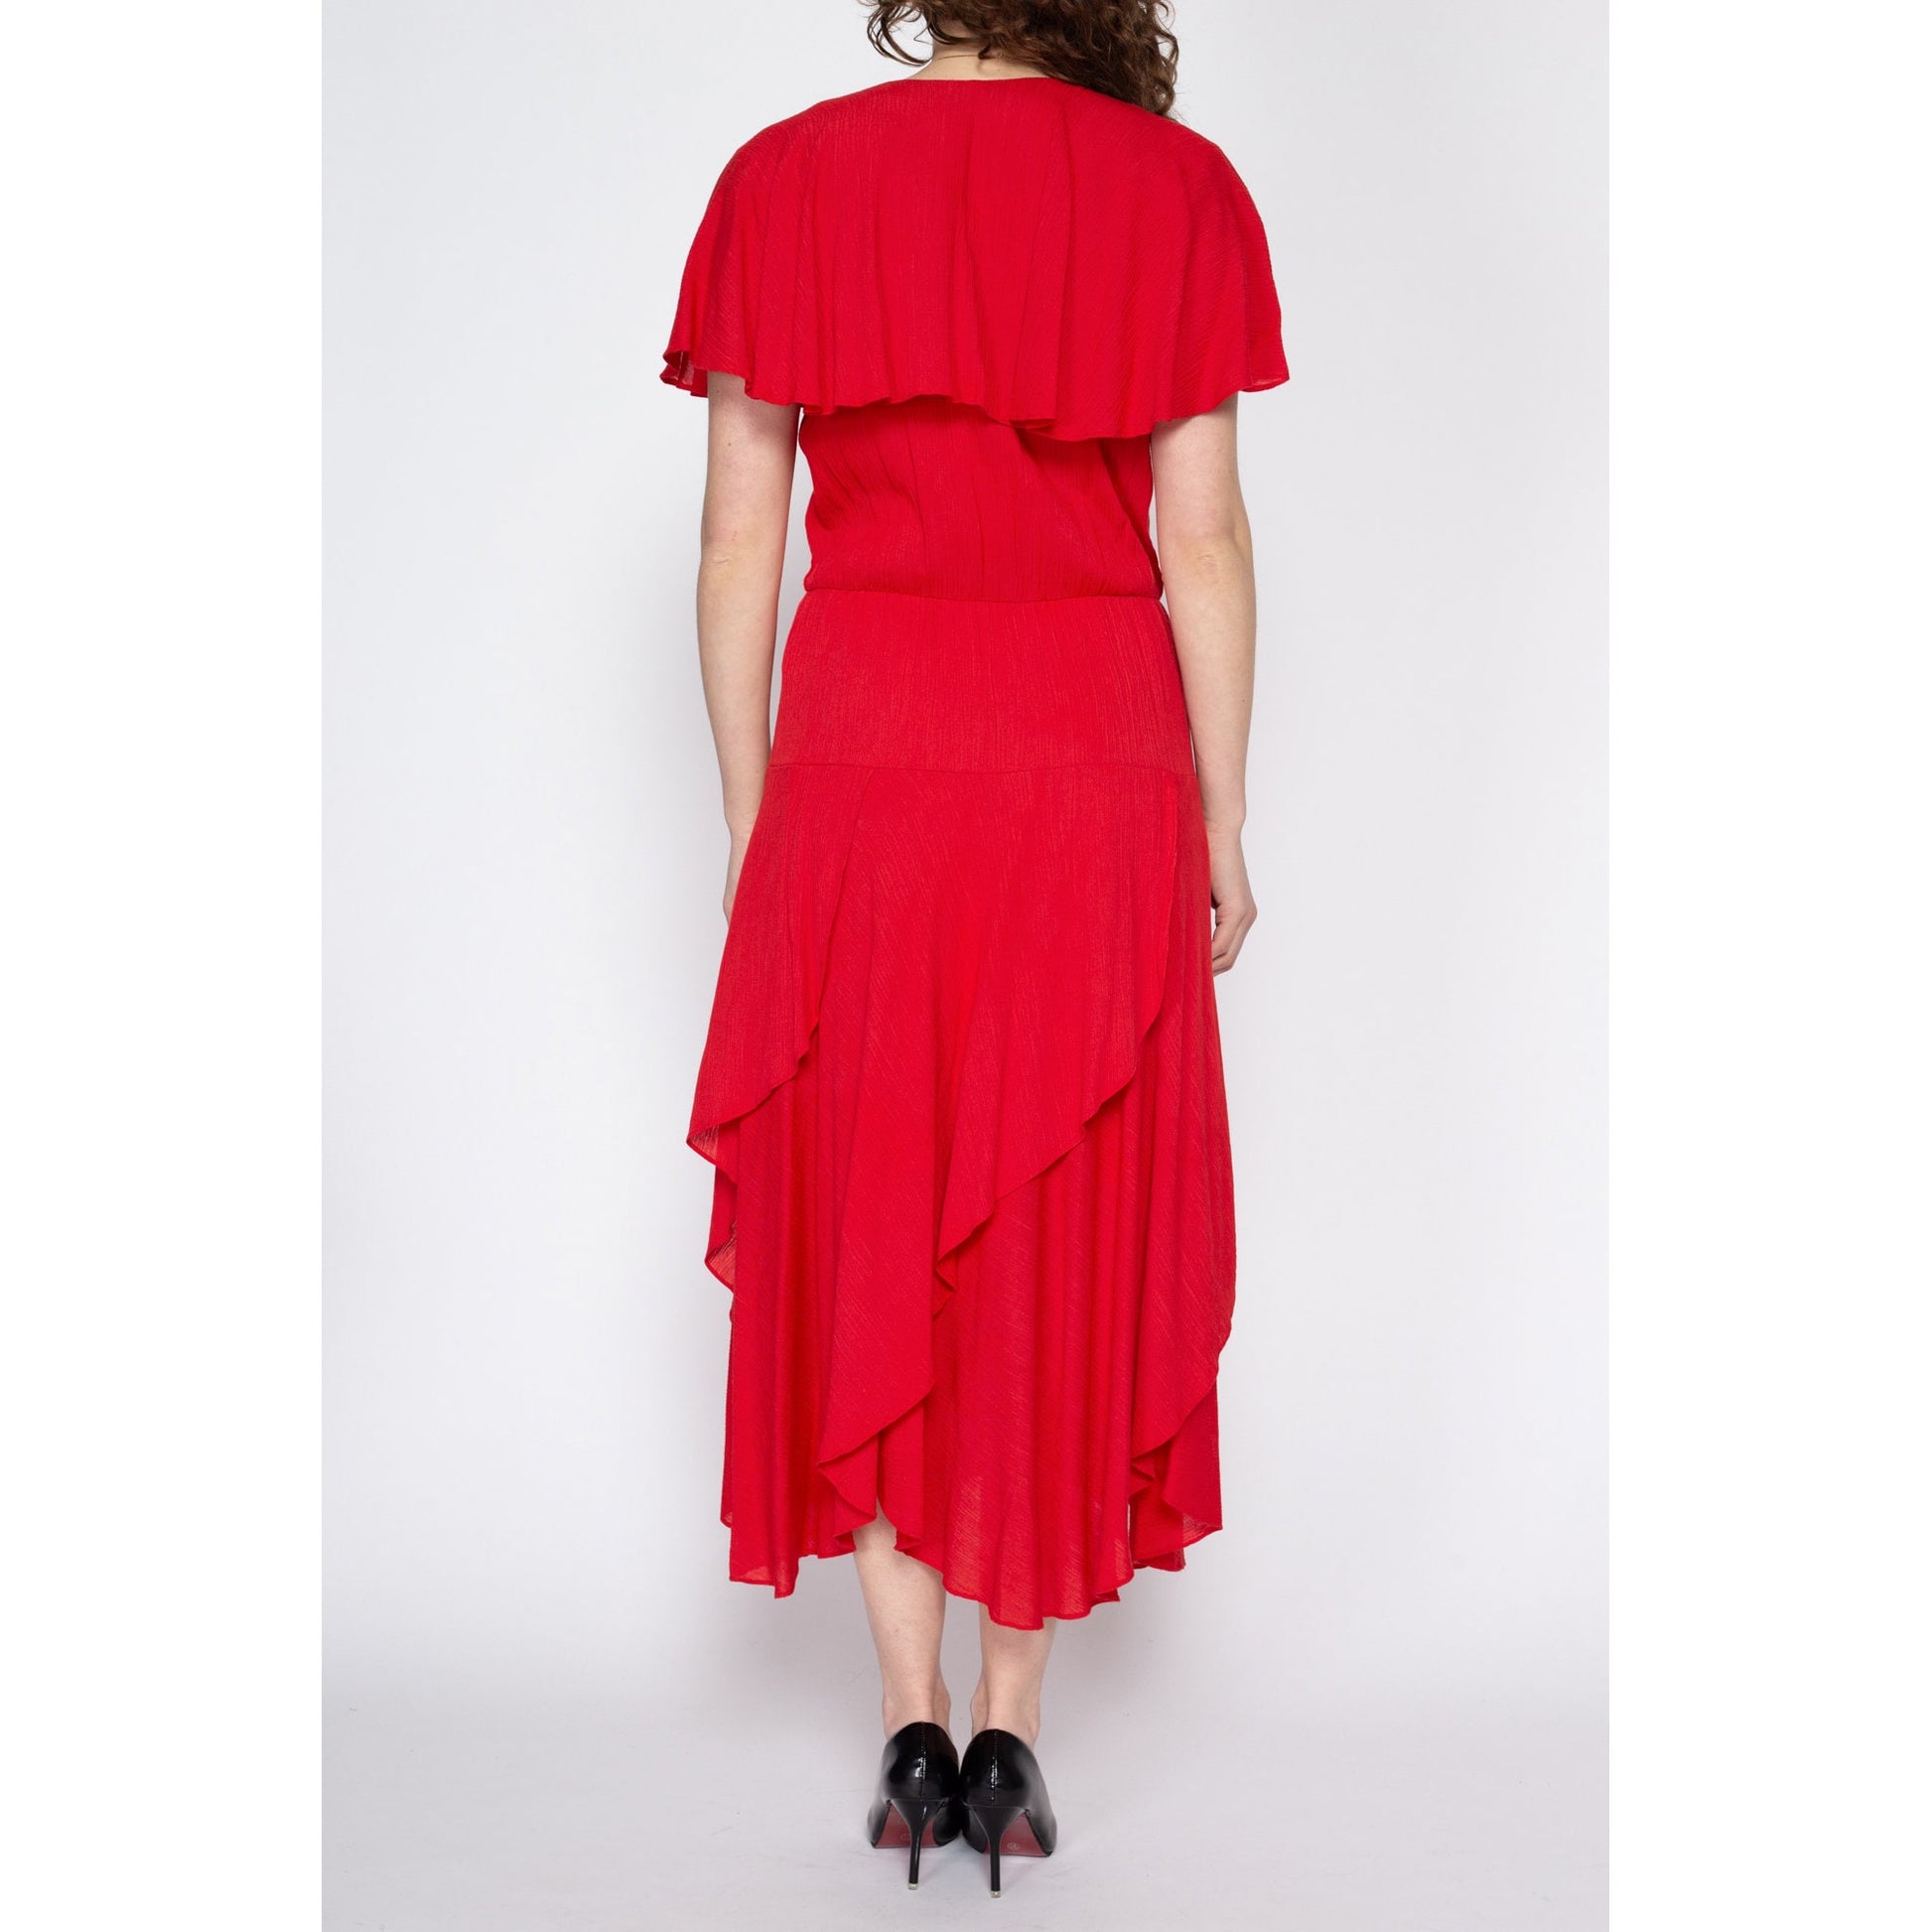 Medium 80s Red Flowy Capelet Maxi Dress | Boho Vintage Flutter Sleeve V Neck Tiered Dress